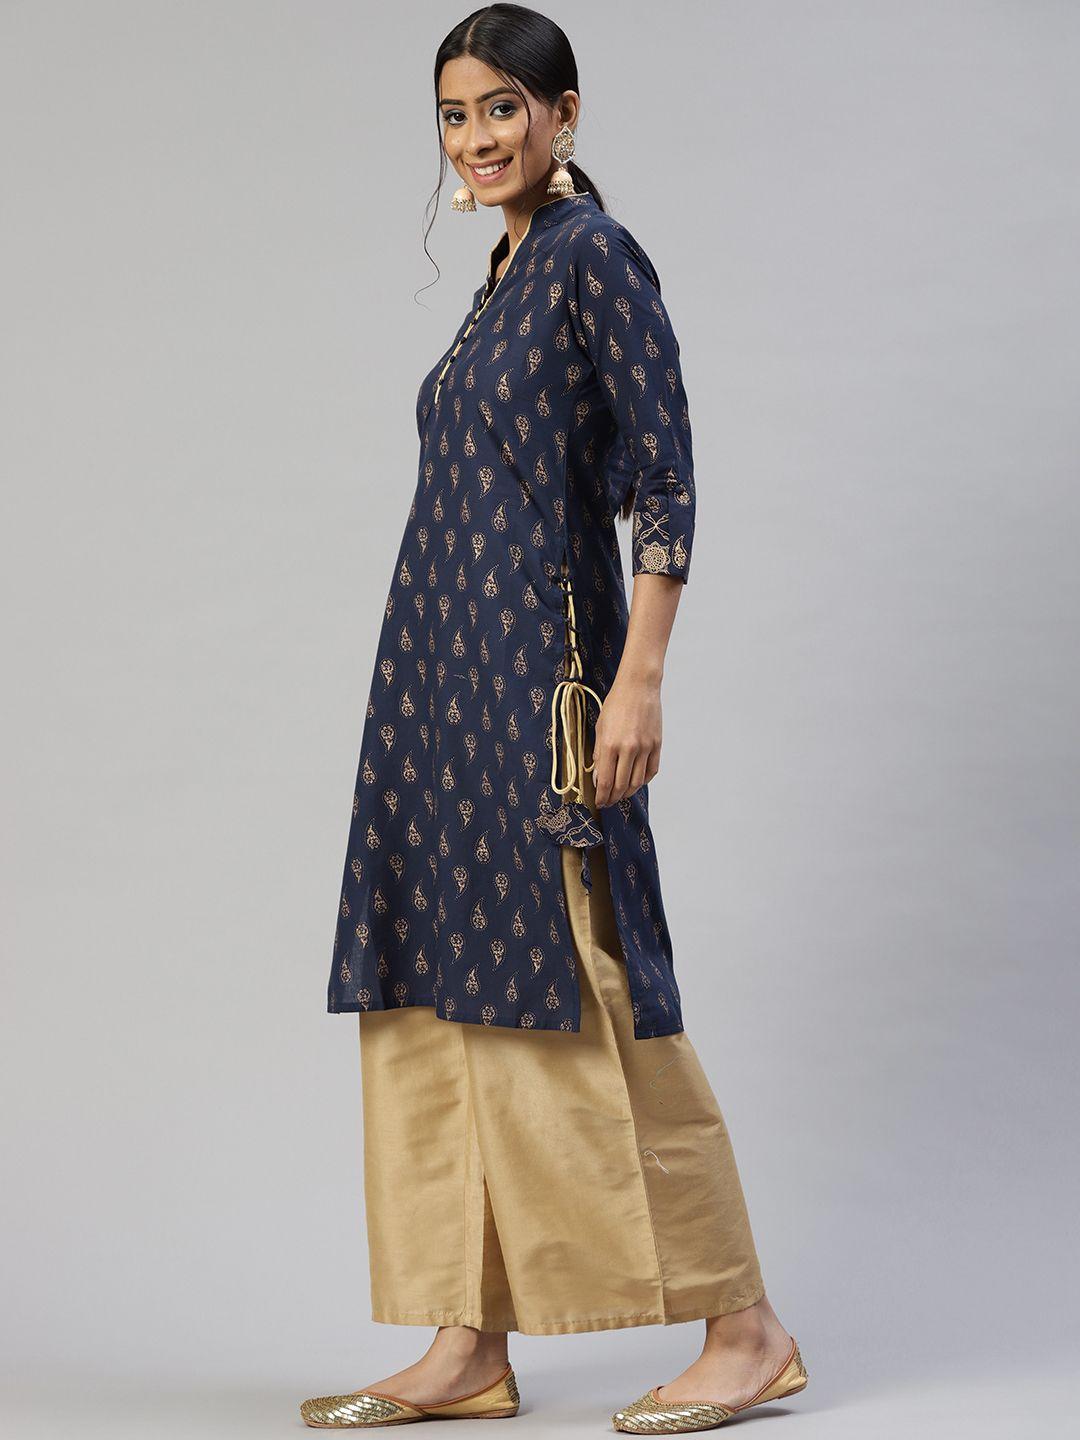 svarchi women navy blue & golden cotton ethnic motifs printed straight kurta